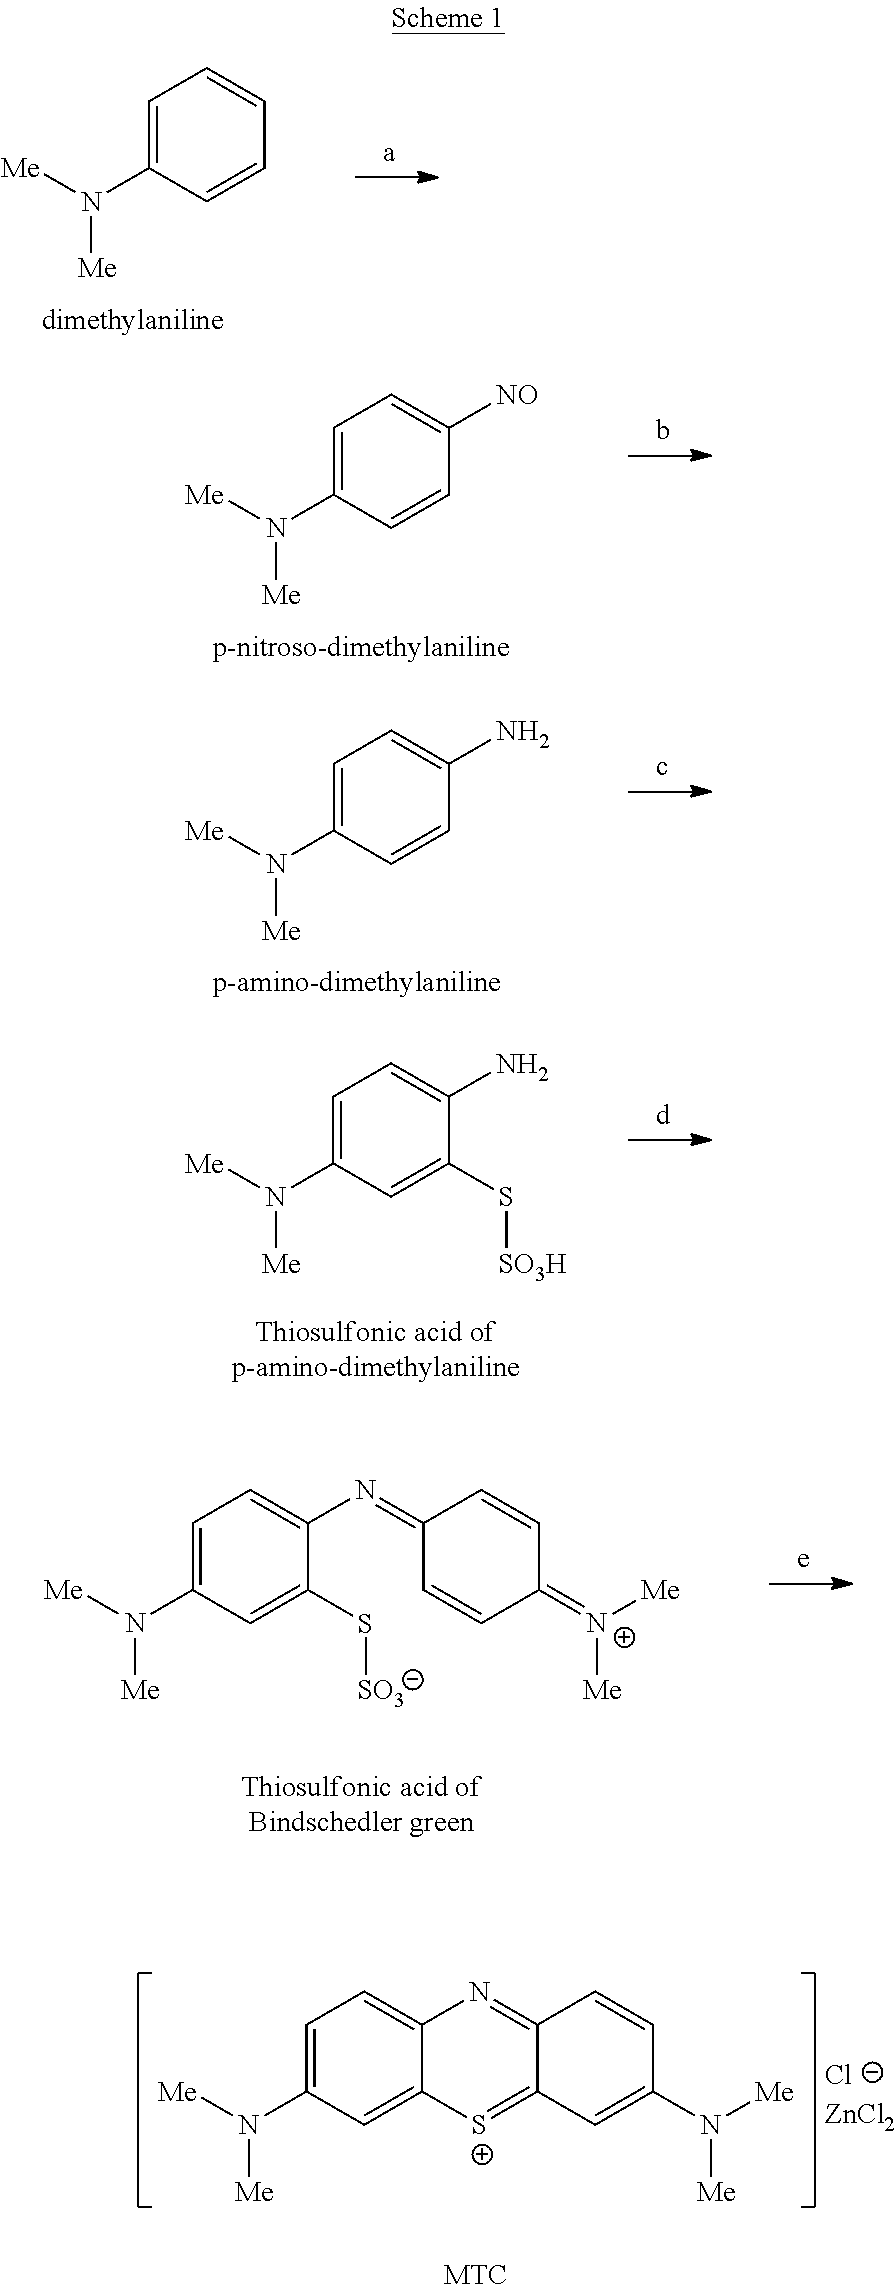 High purity diaminophenothiazinium compounds including methylthioninium chloride (MTC)